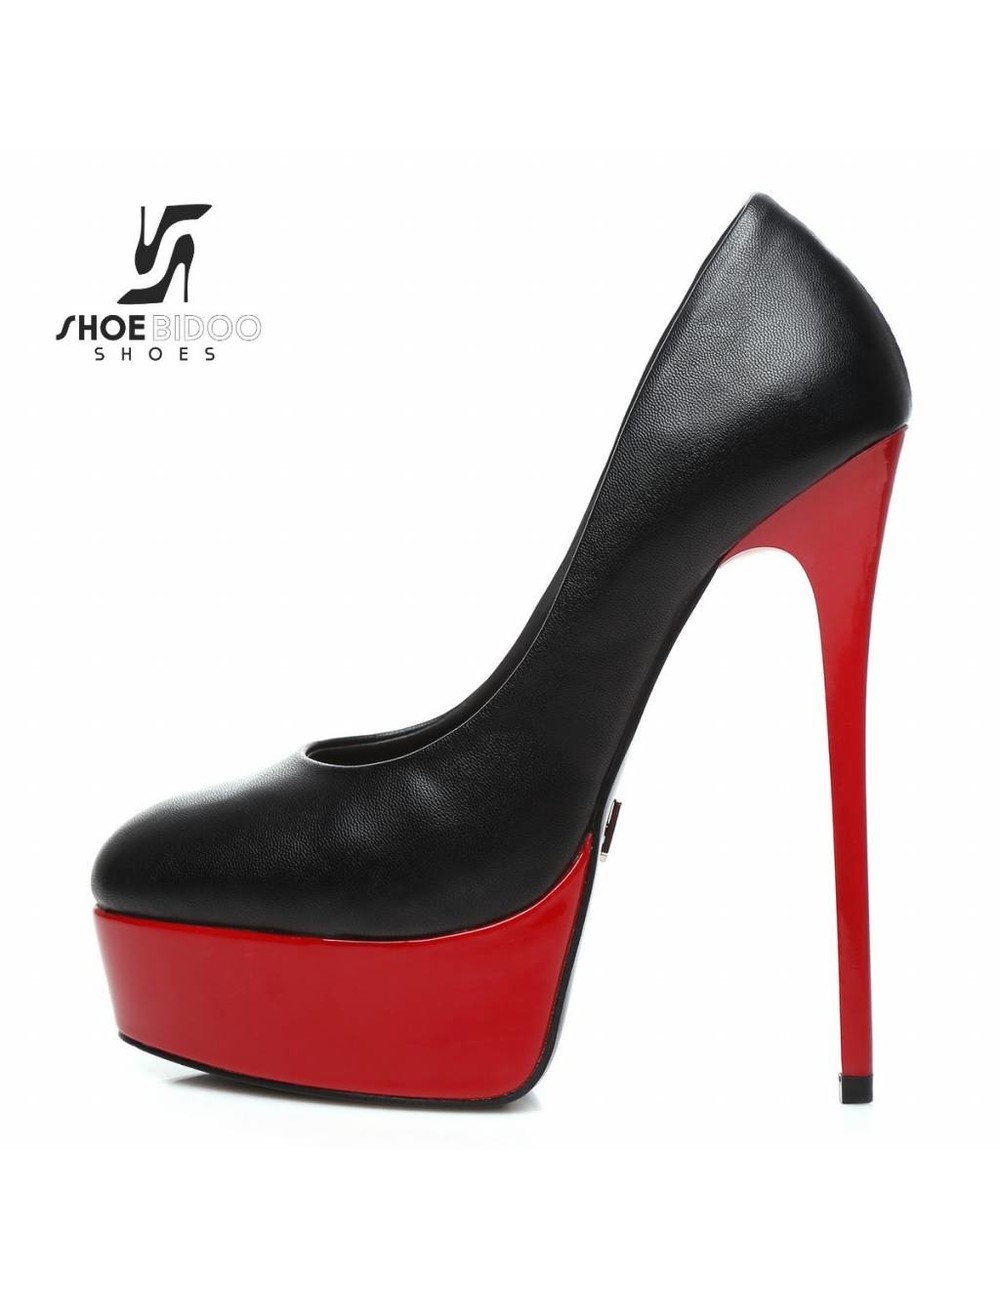 Black and Red shiny Giaro "Galana" platforms 16cm heel fetish pumps - Giaro High Heels | store - All High Heels